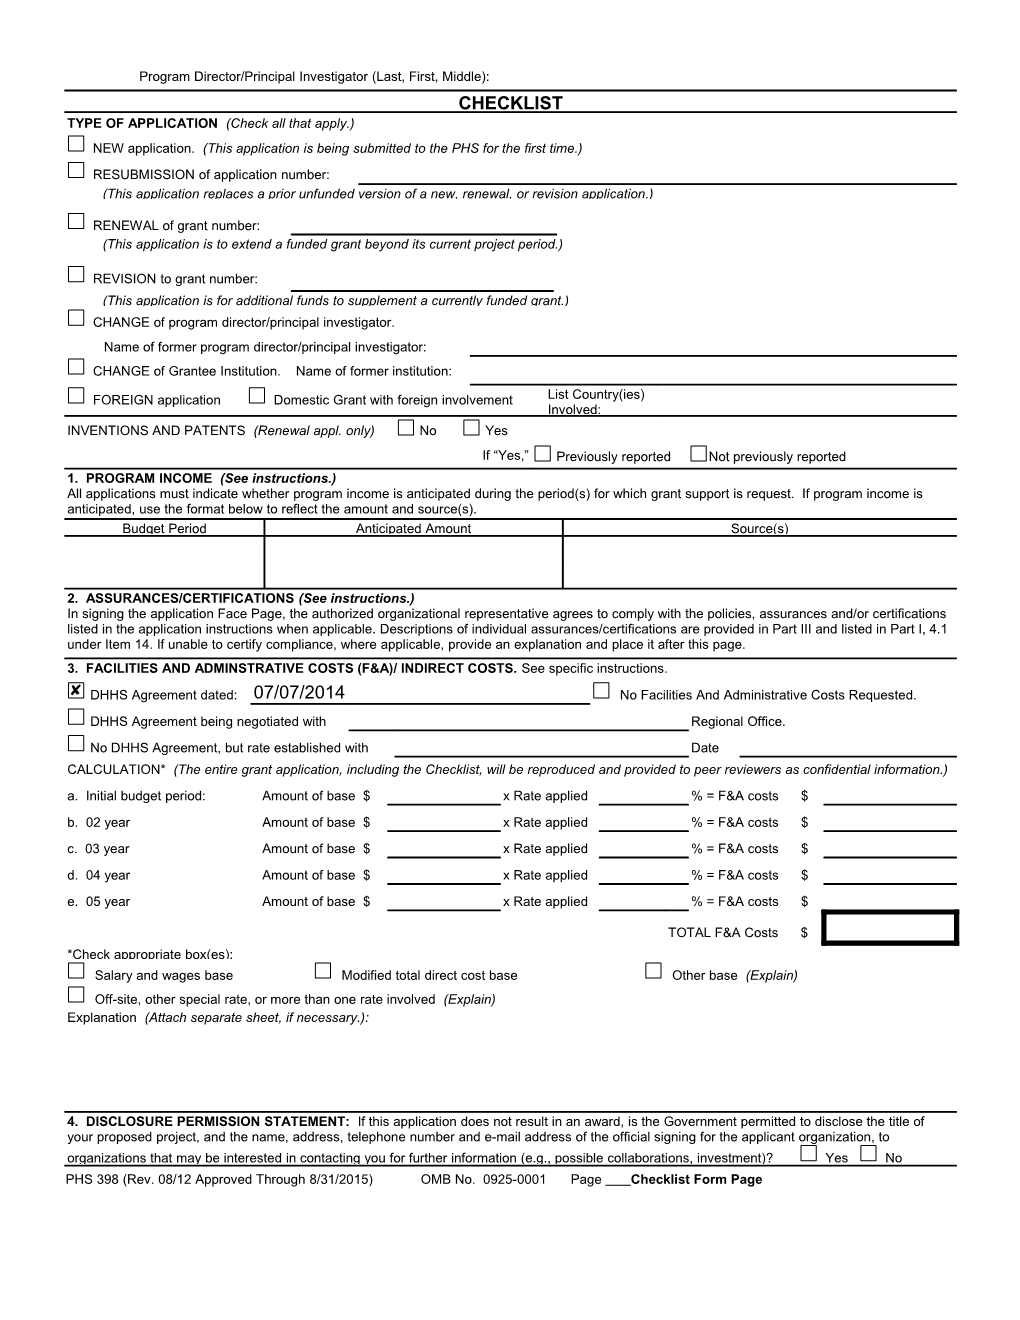 PHS 398 (Rev. 08/12), OMB No. 0925-0001, Checklist Form Page